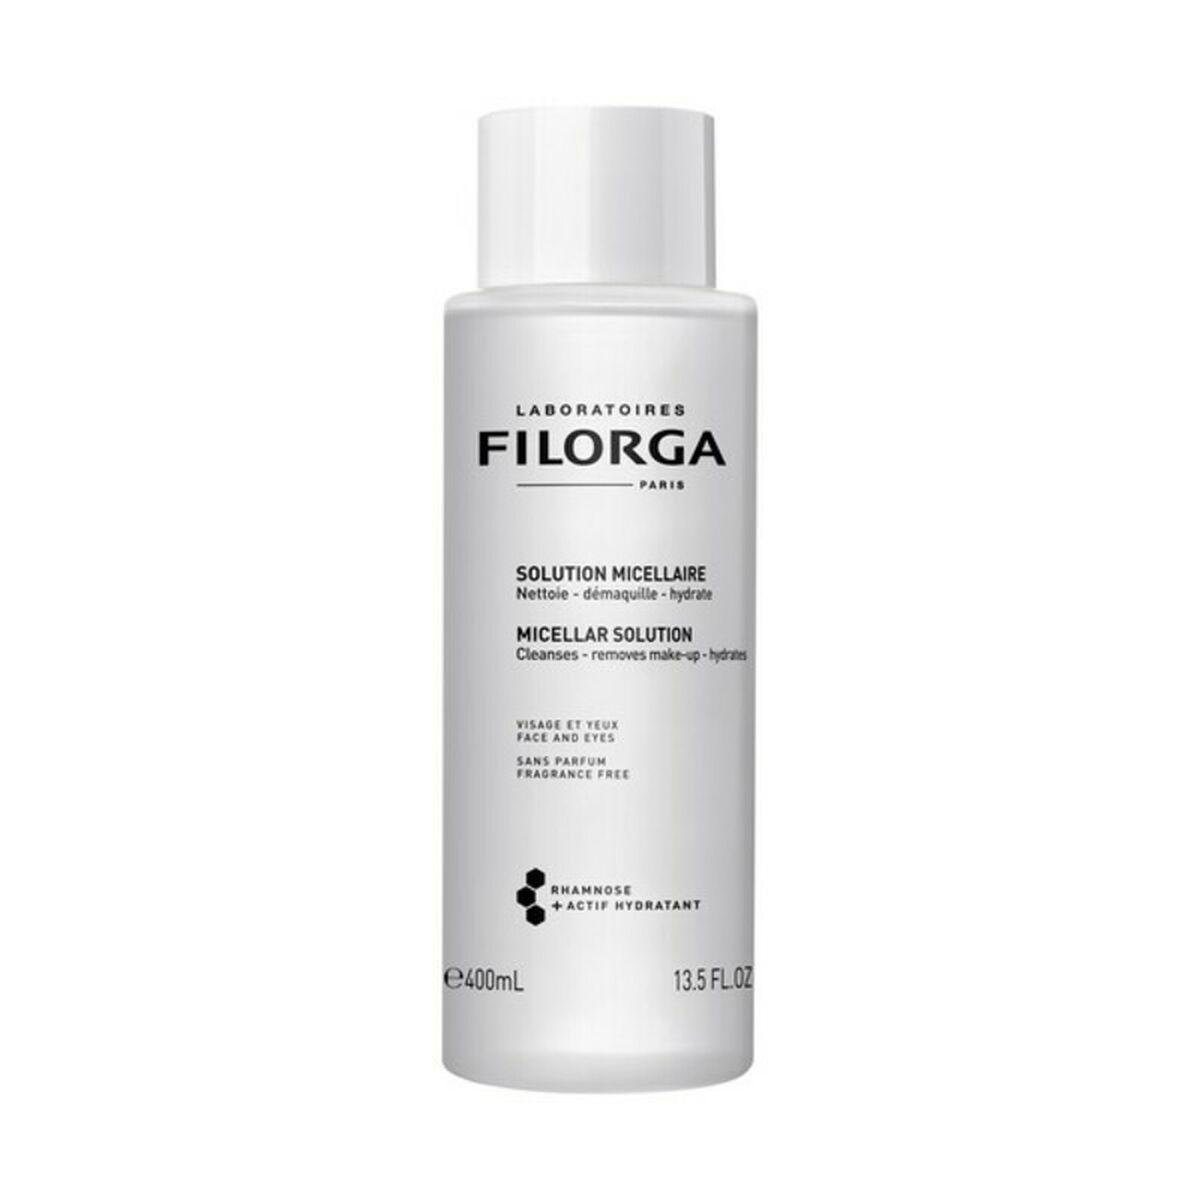 Se Makeupfjerner micellar vand Antiageing Filorga (400 ml) hos Boligcenter.dk